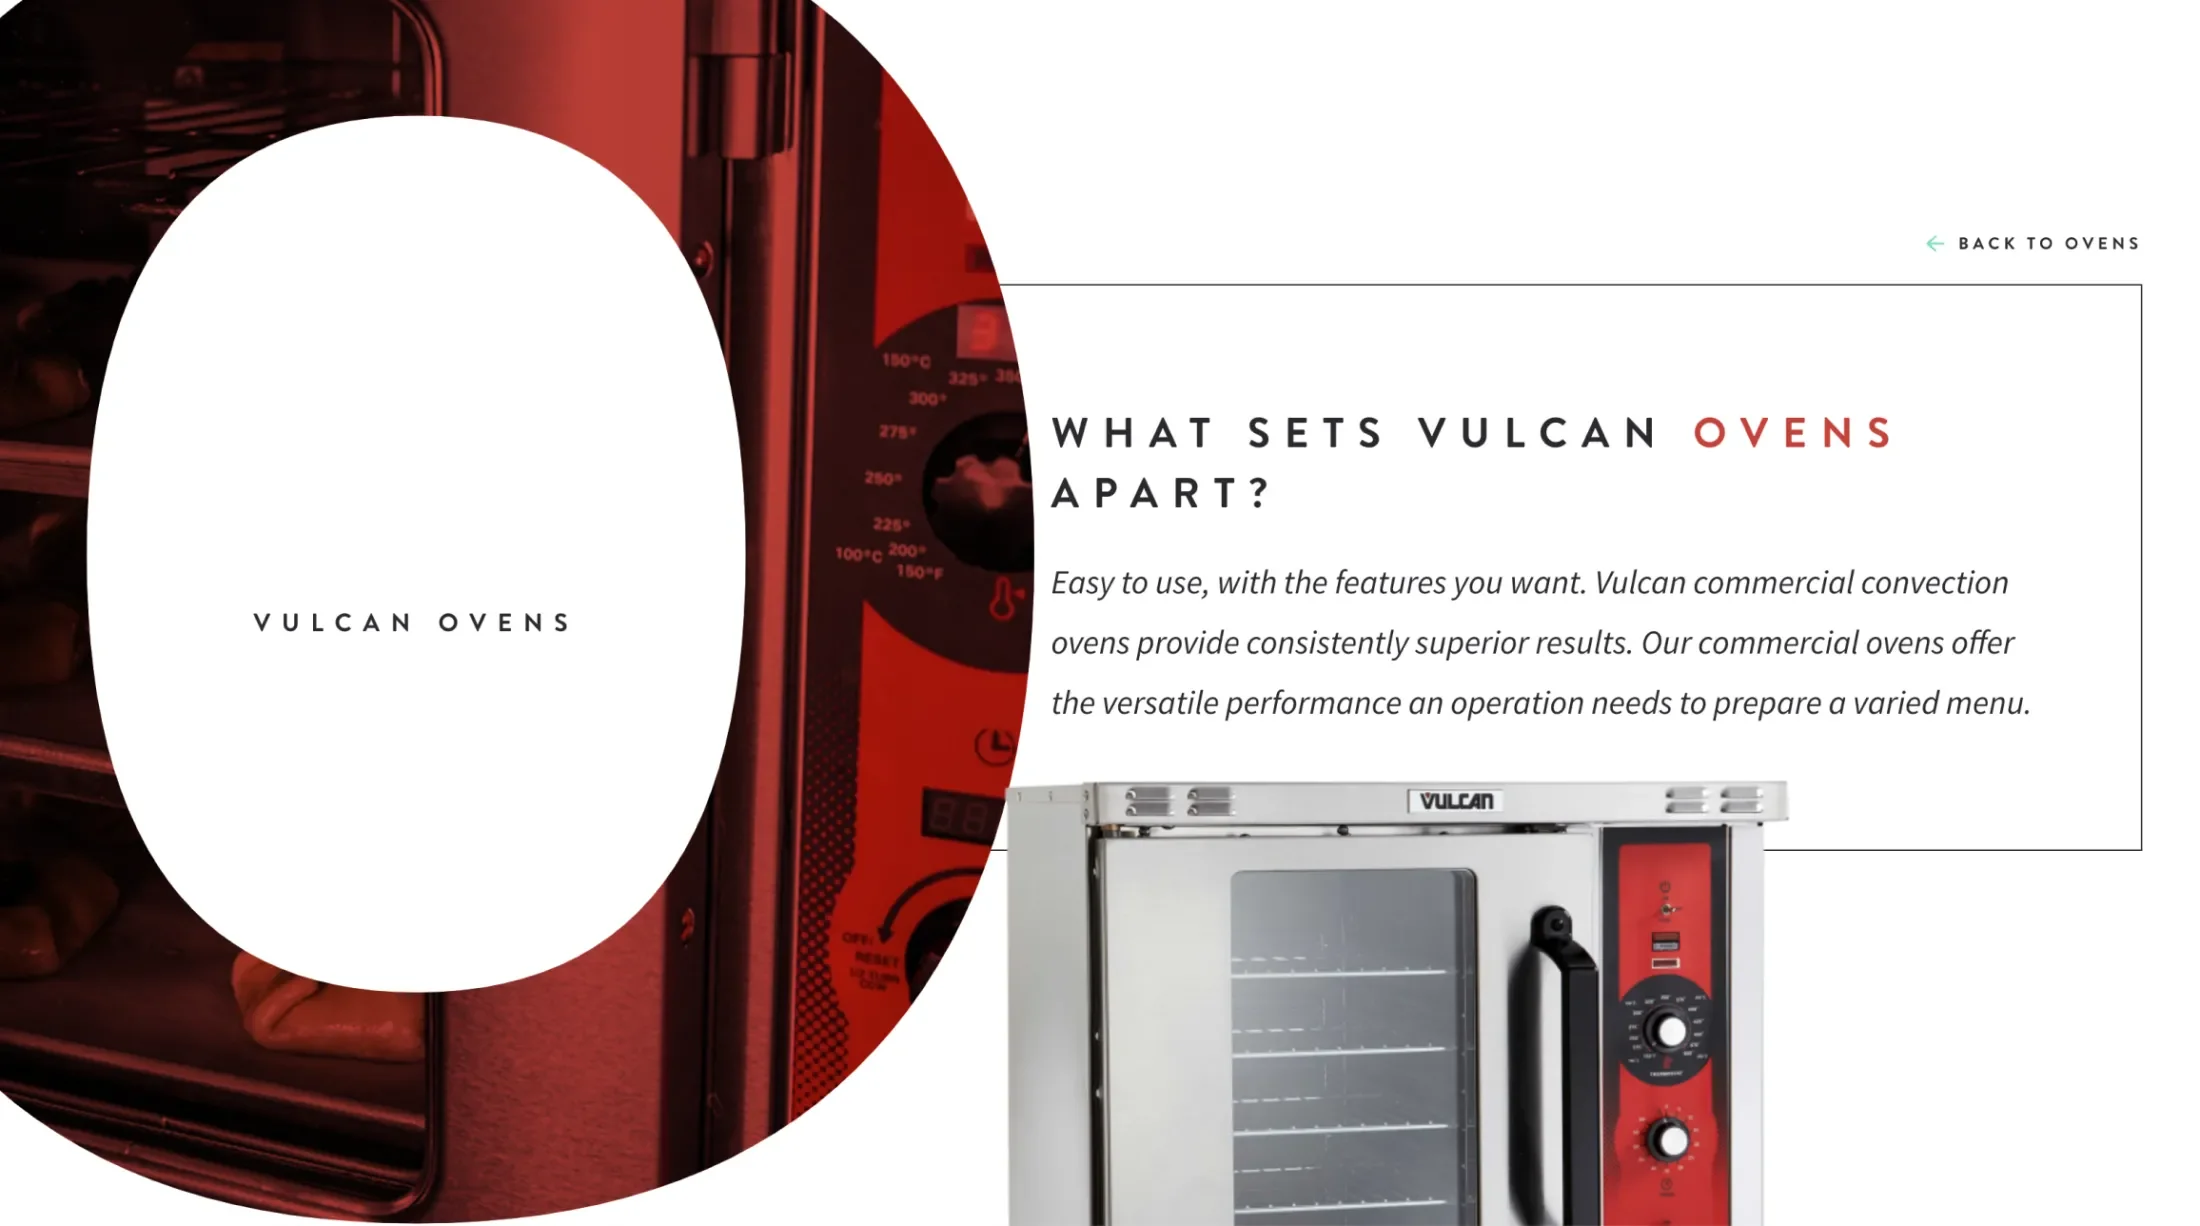 Slide on "What sets Vulcan ovens apart?"